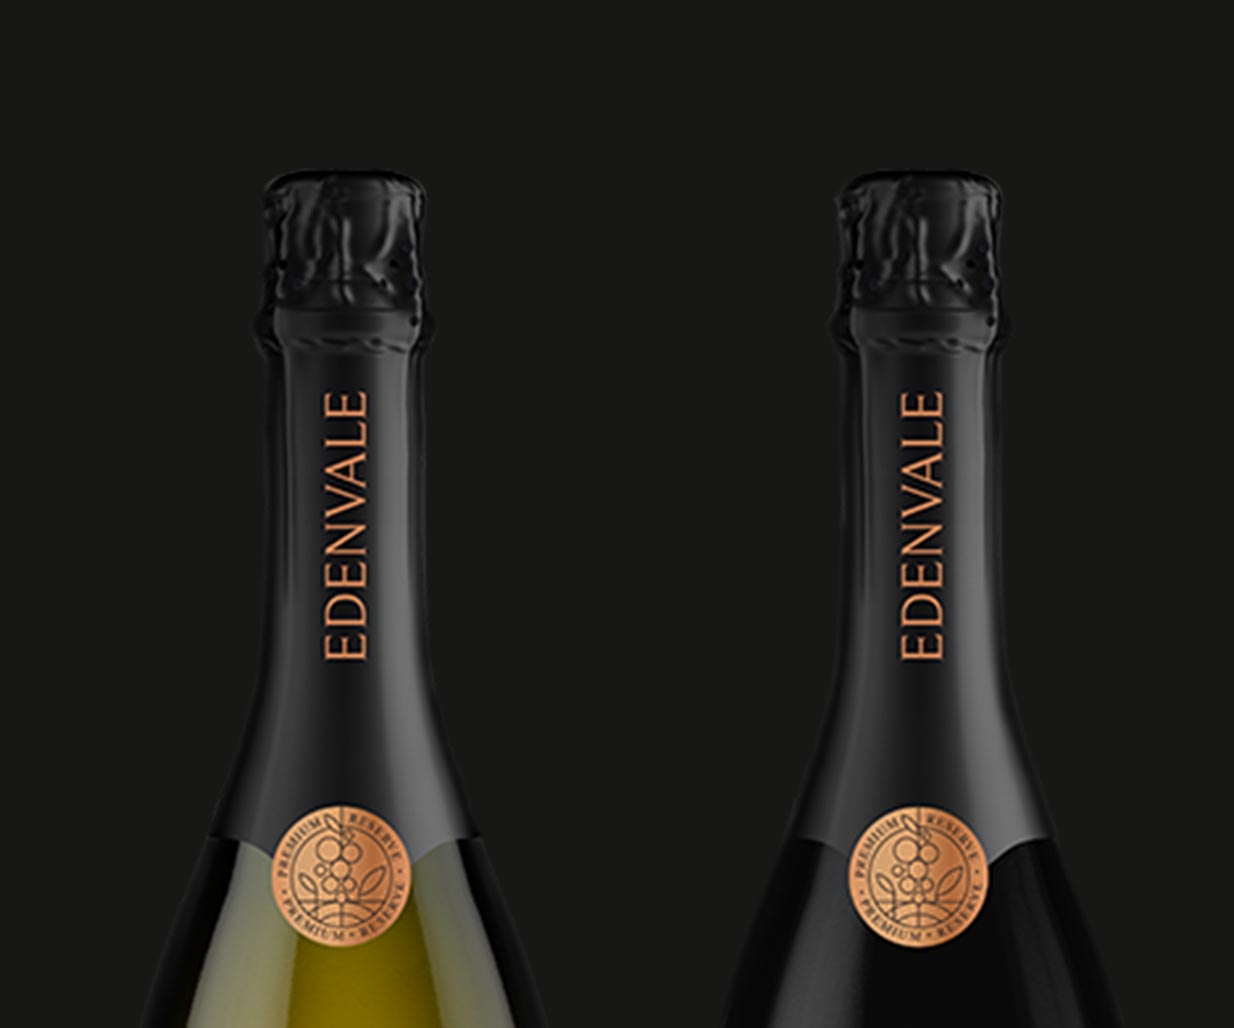 Australian wine label designers, Percept, create branding and packaging design for Edenvale, project image C